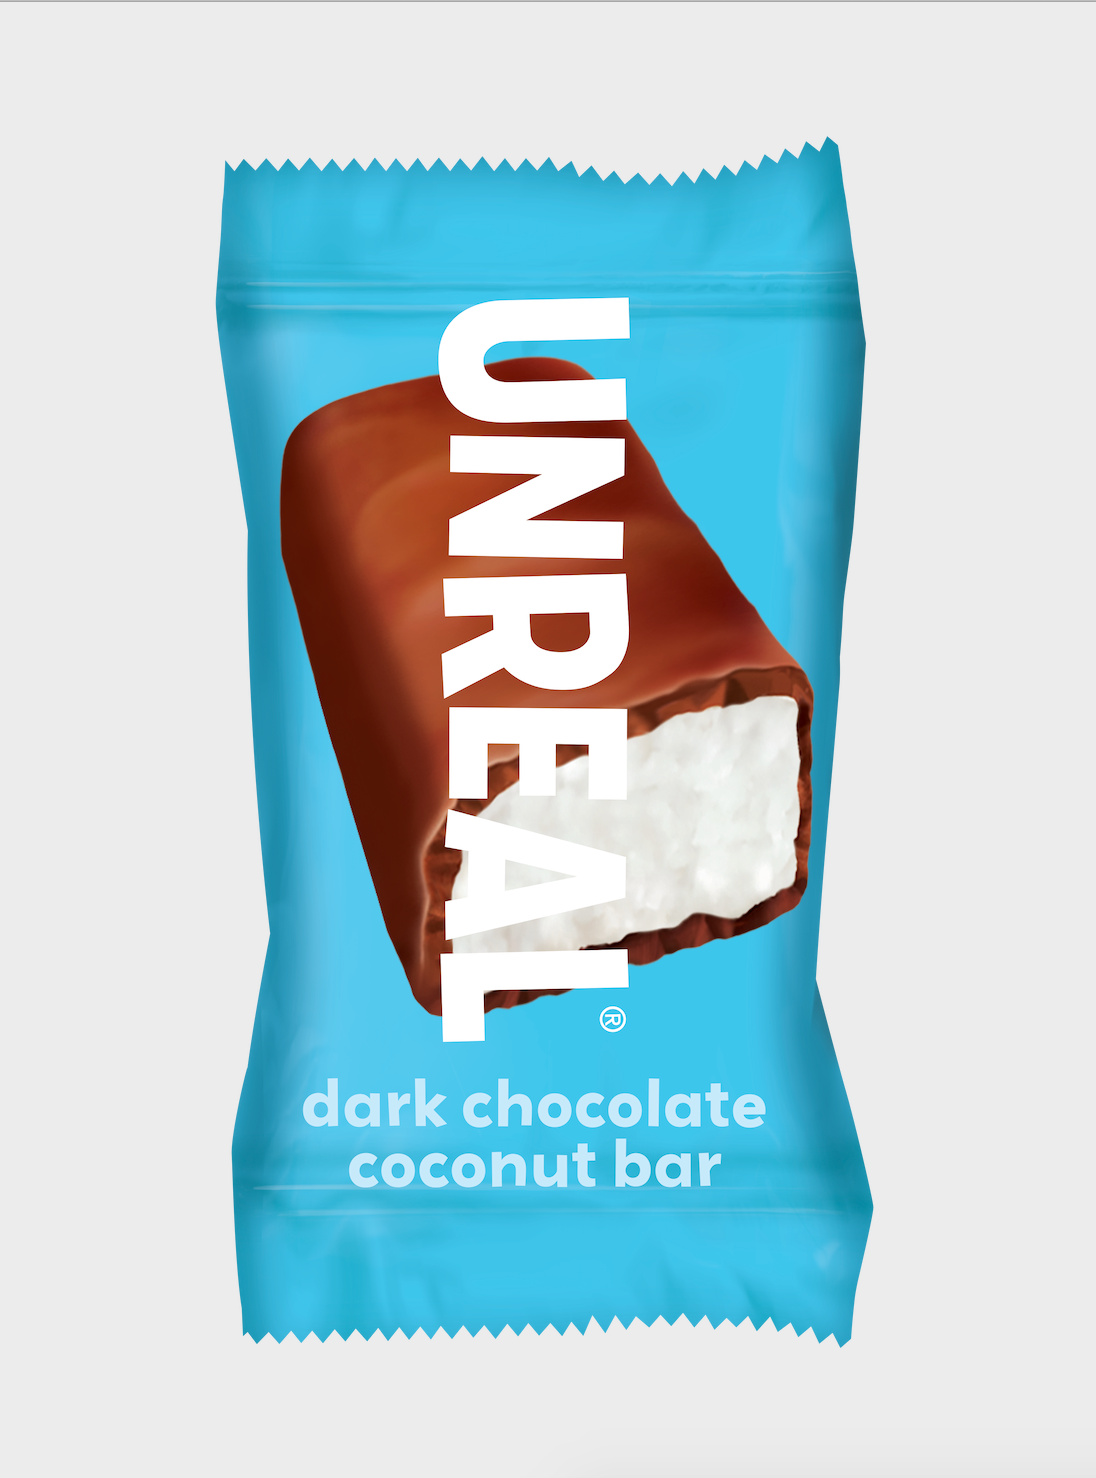 Dark Chocolate Coconut Bar (Low Sugar, Organic Ingredients) - Snack Size by UNREAL